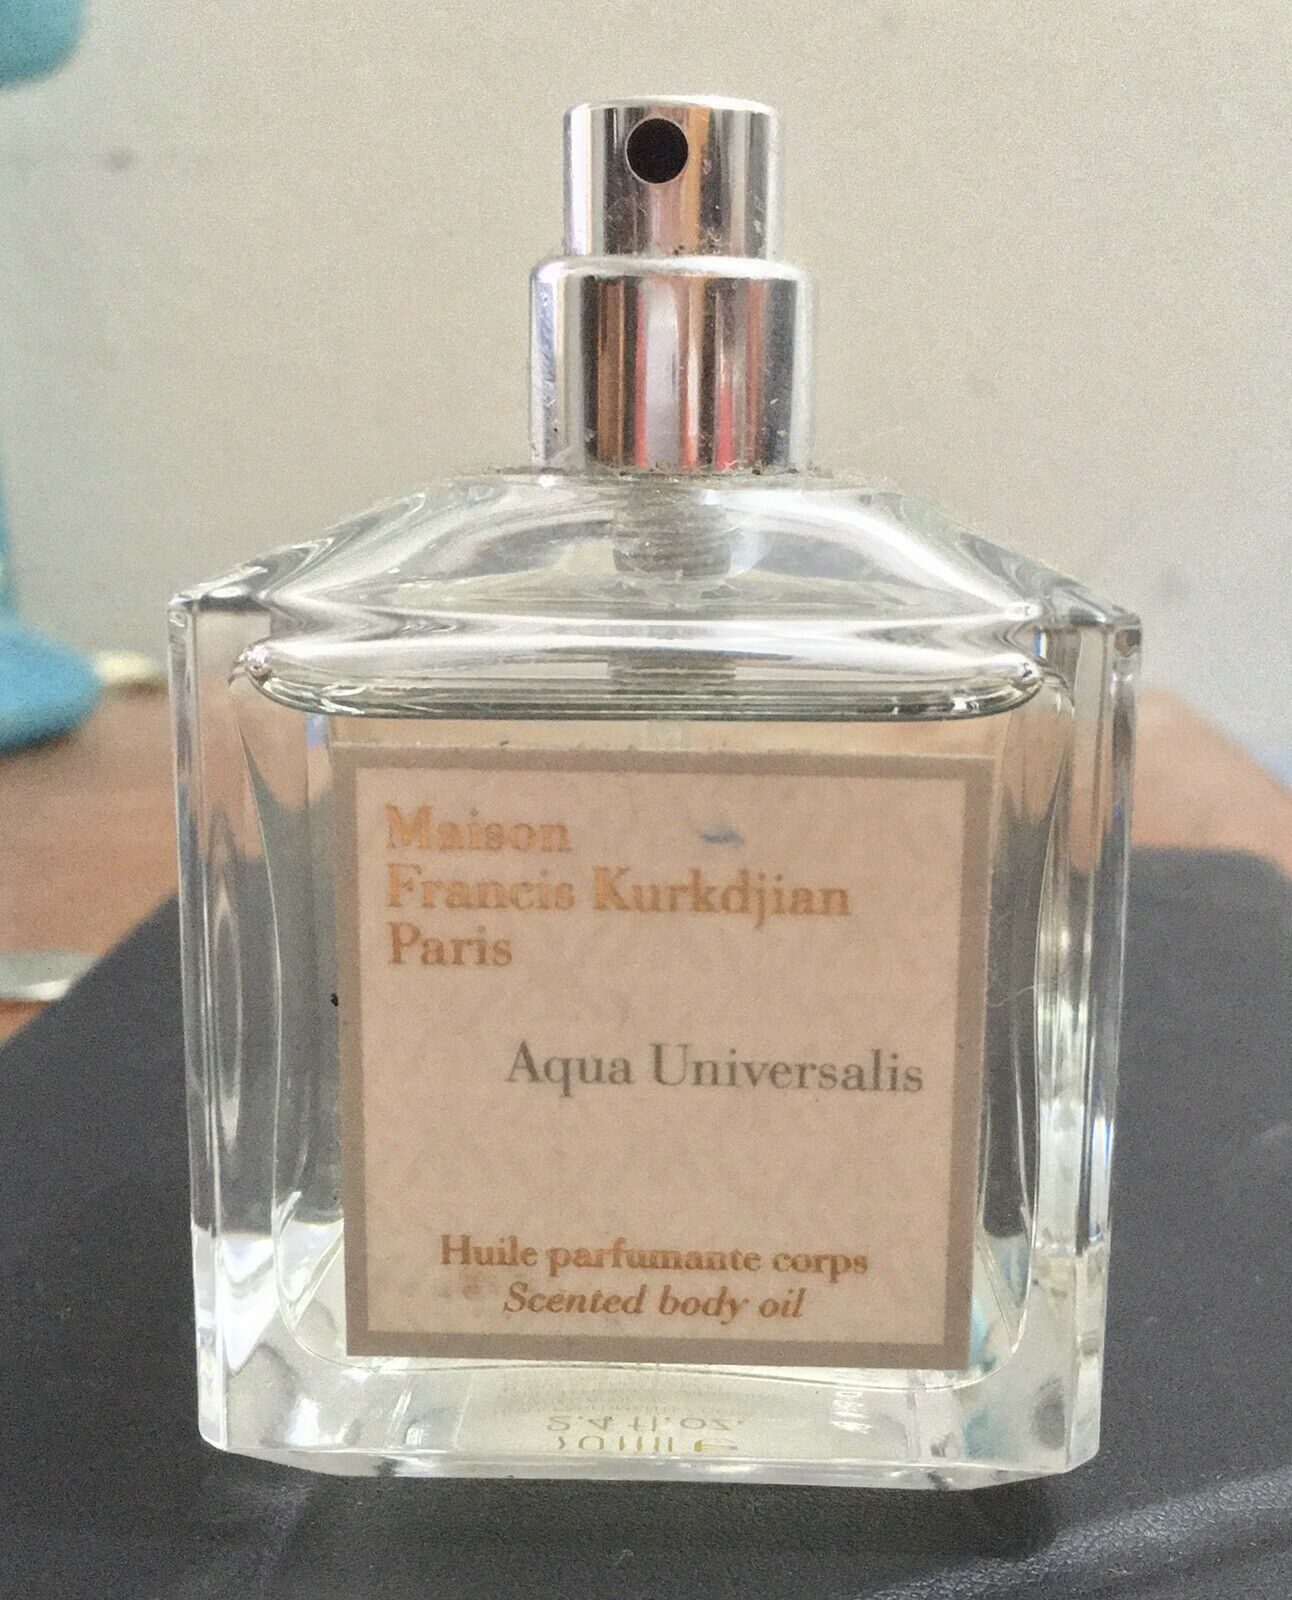 Primary image for Maison Francis Kurkdjian Aqua Universalis Unisex Scented Body Oil 2.4 oz 70 ml